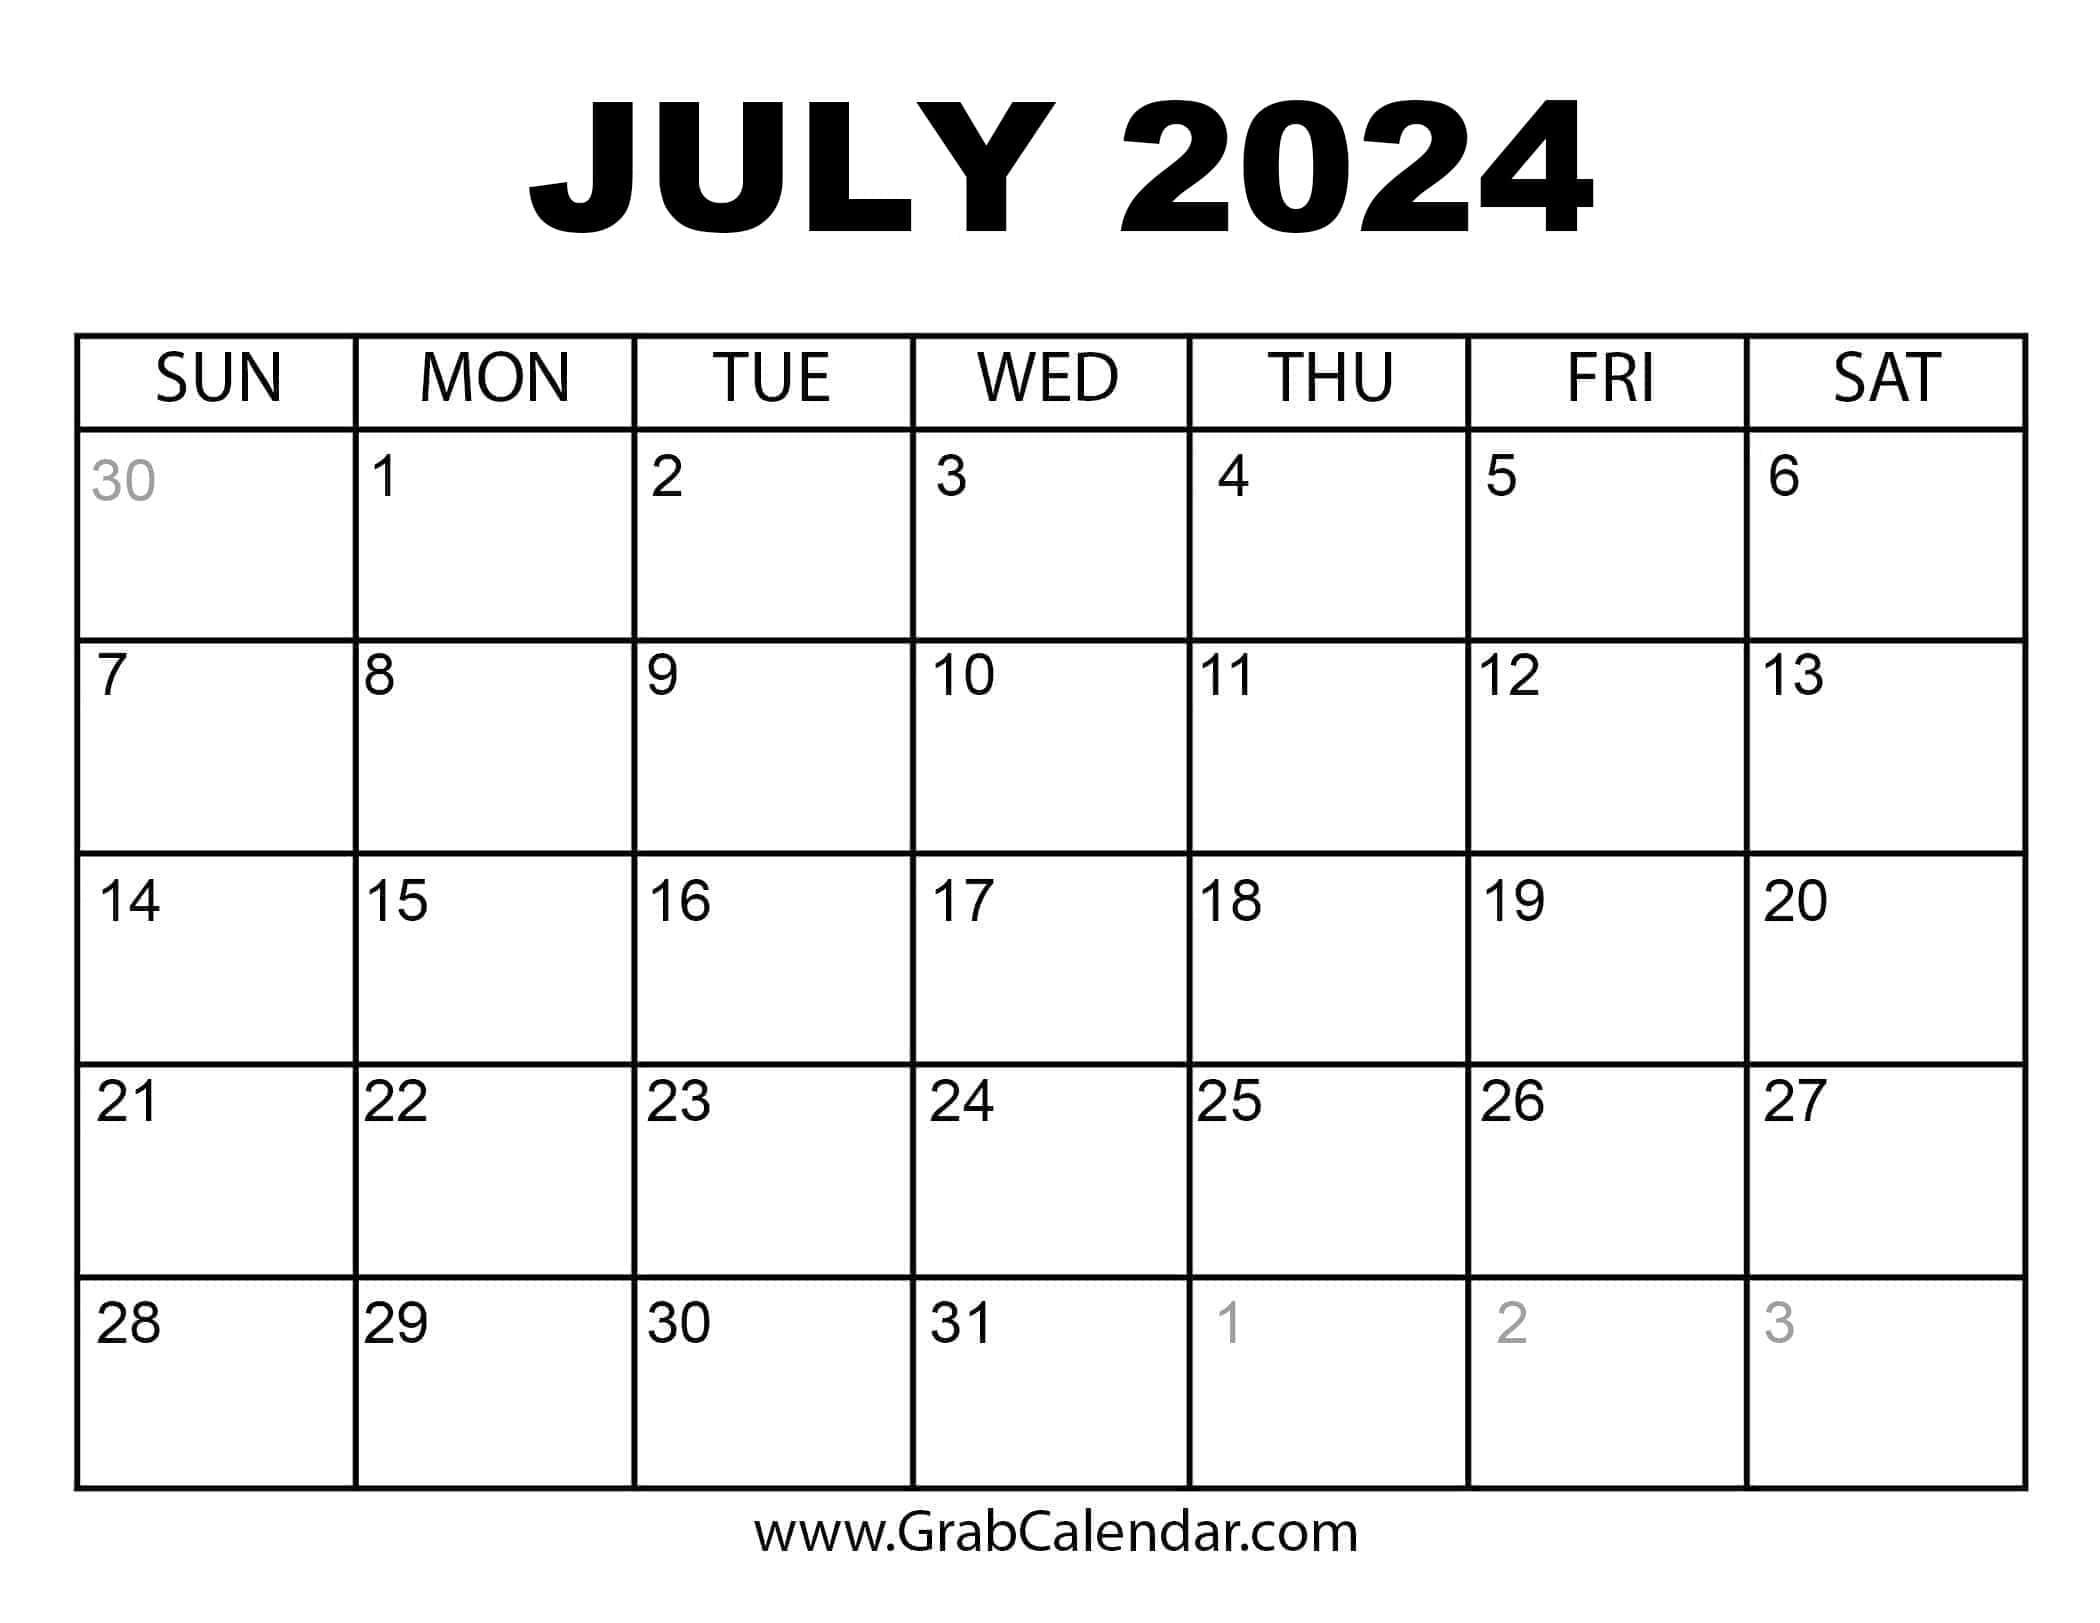 Printable July 2024 Calendar intended for Weather Calendar July 2024